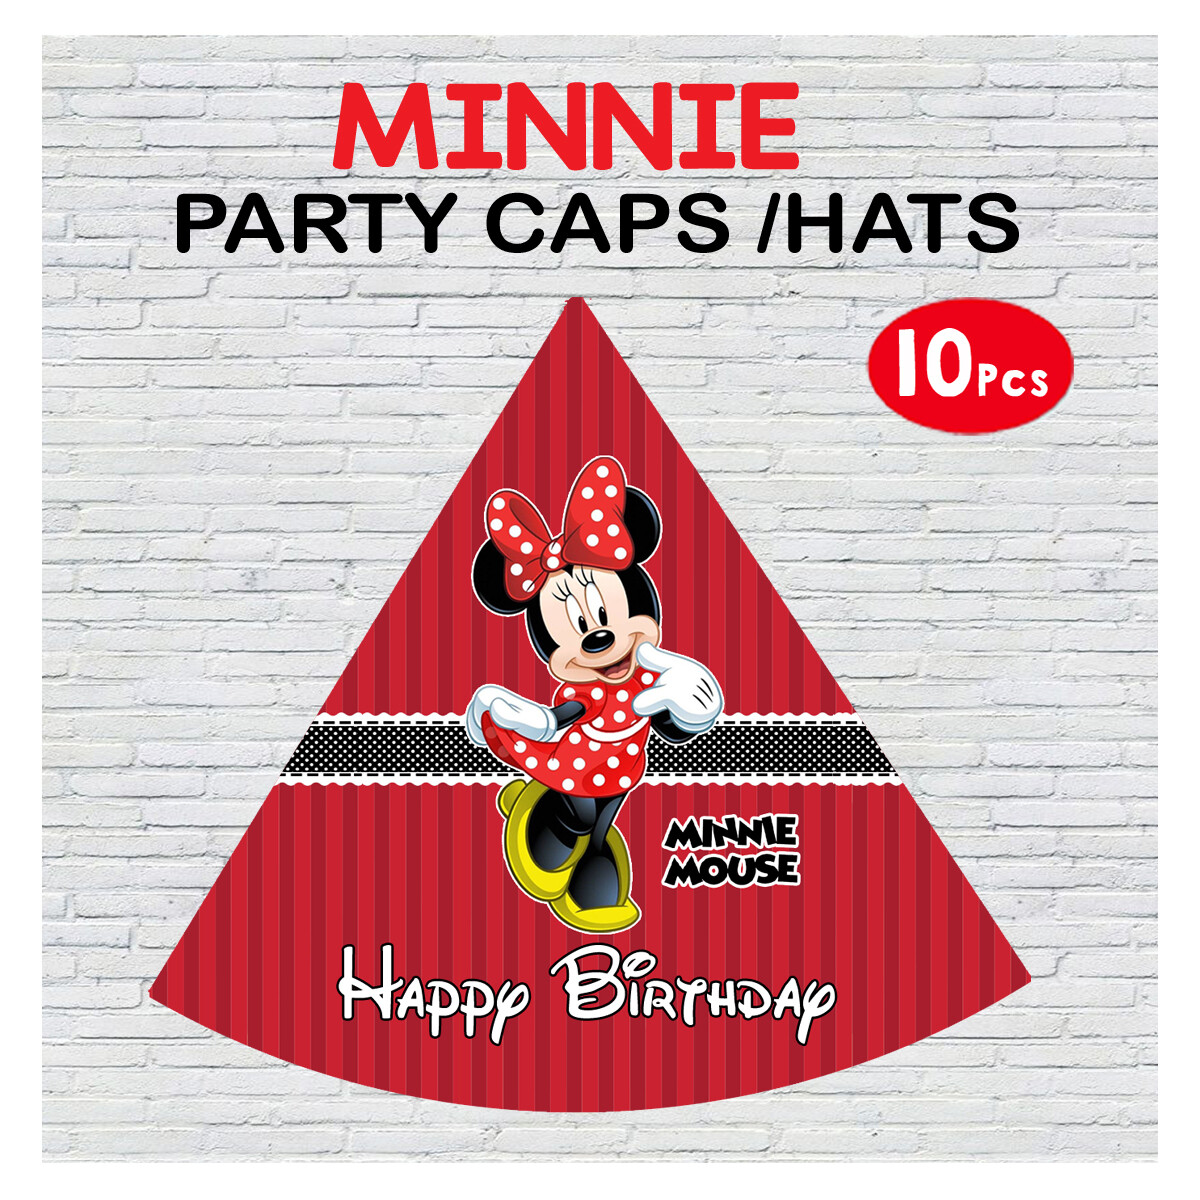 Minnie Mouse Party Caps / Hats (10 Pcs) - Non Personalized